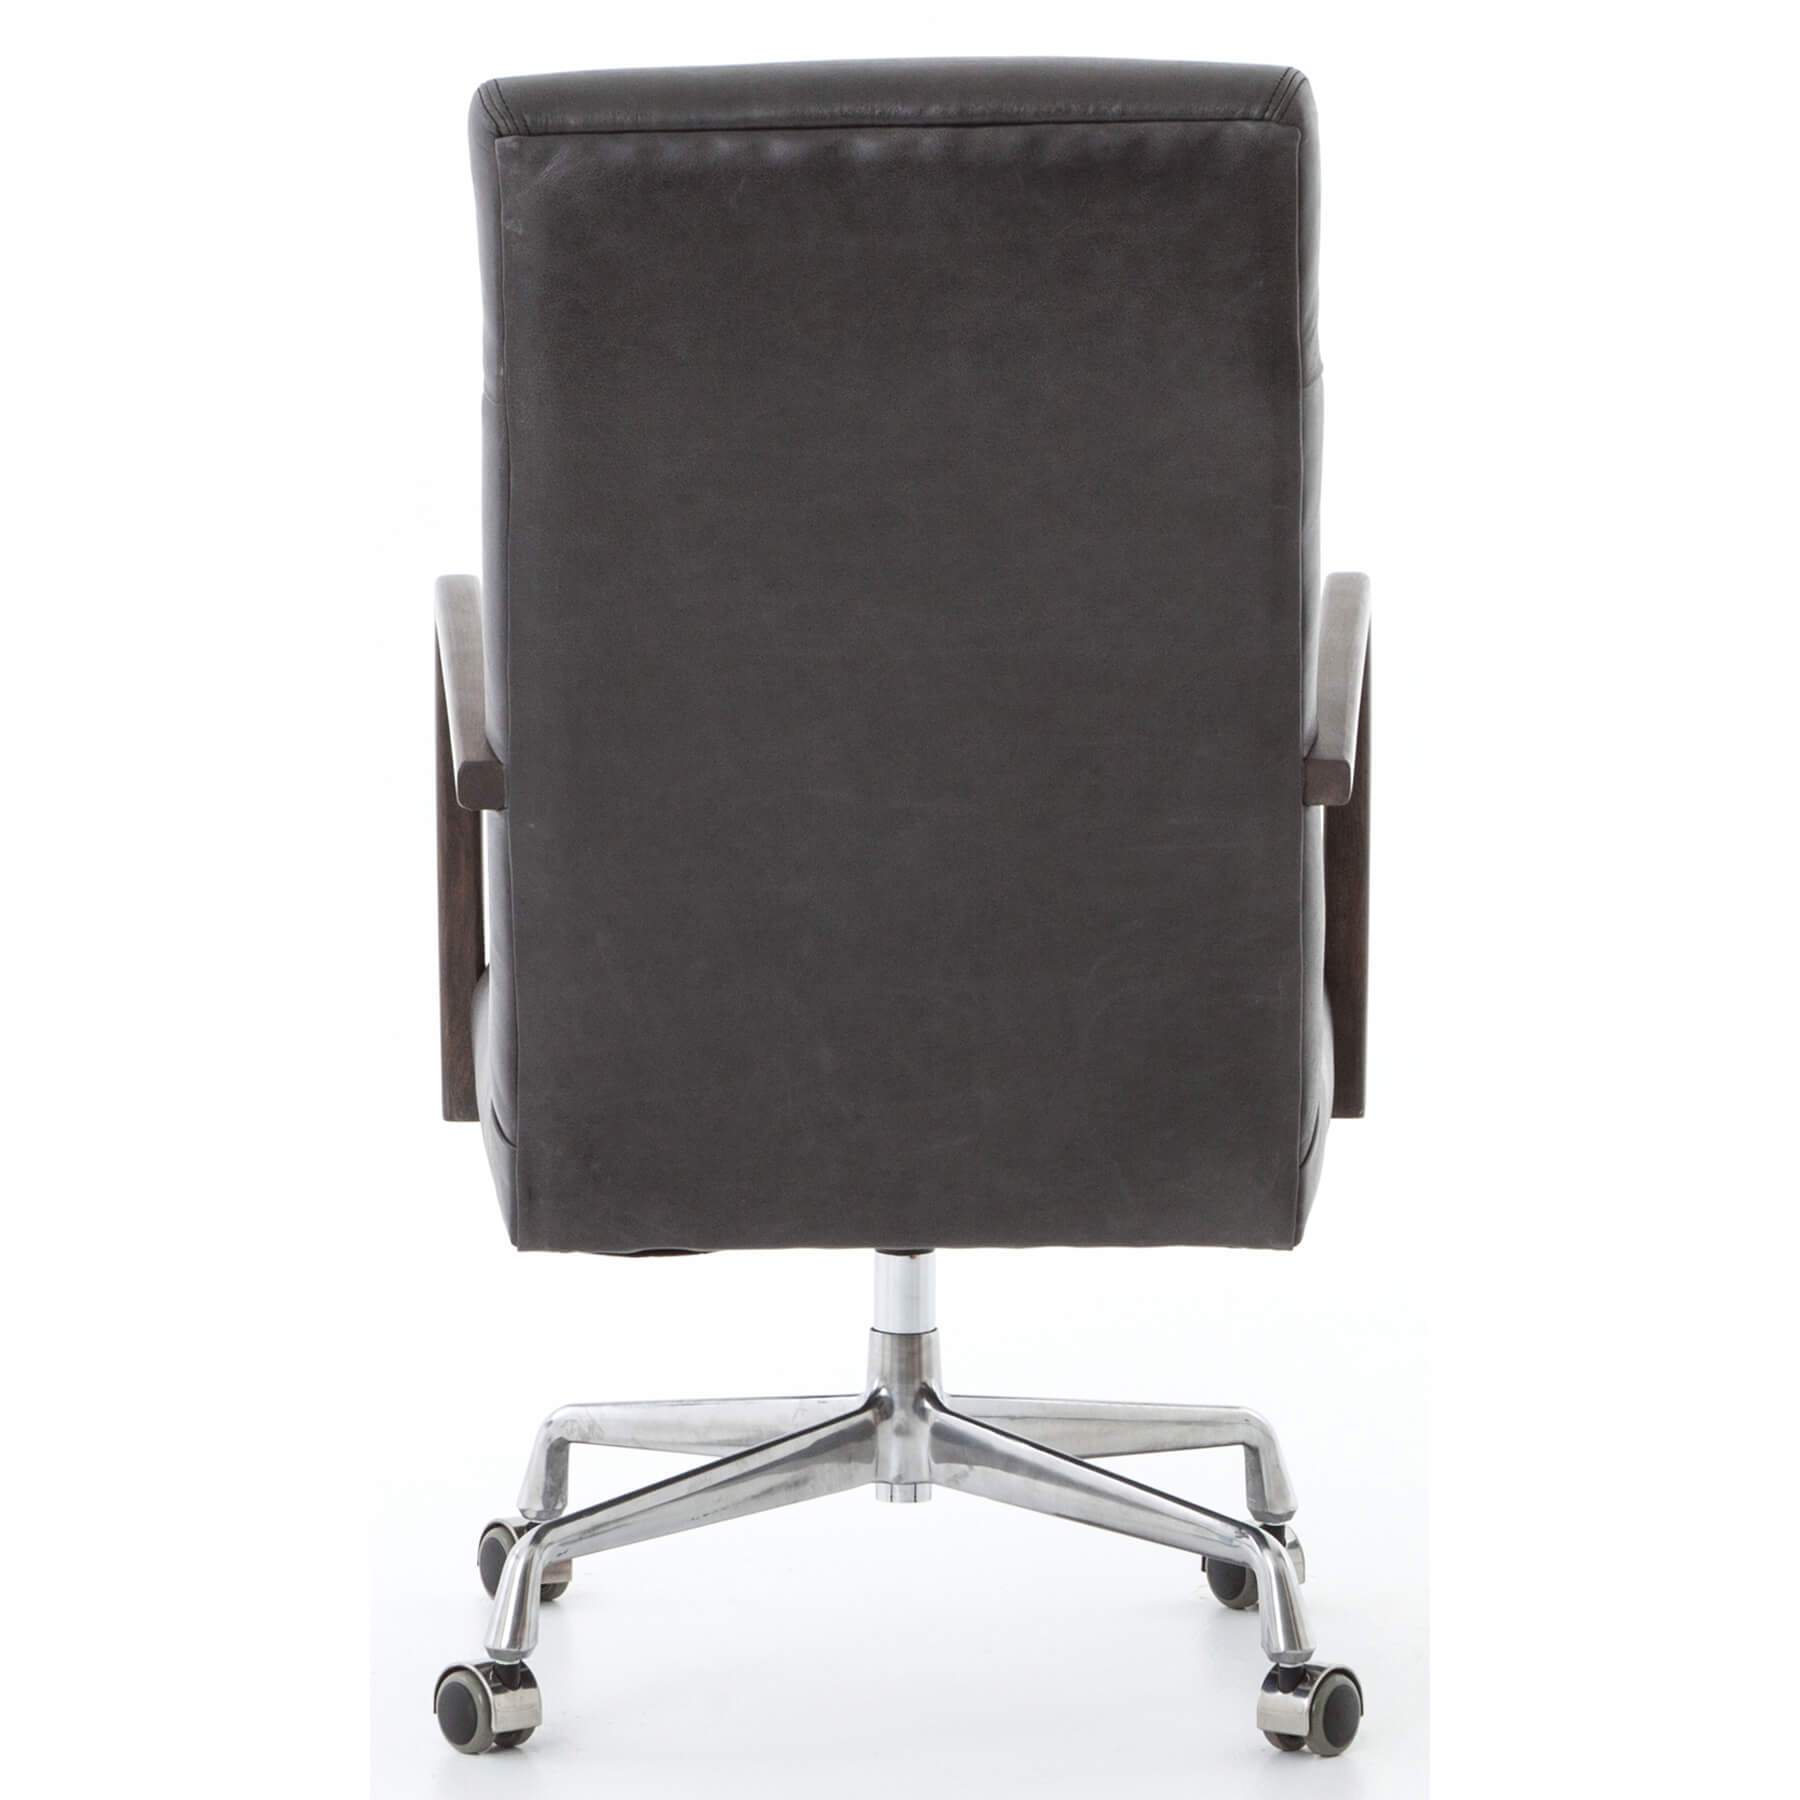 Bryson Leather Desk Chair, Chaps Ebony – High Fashion Home